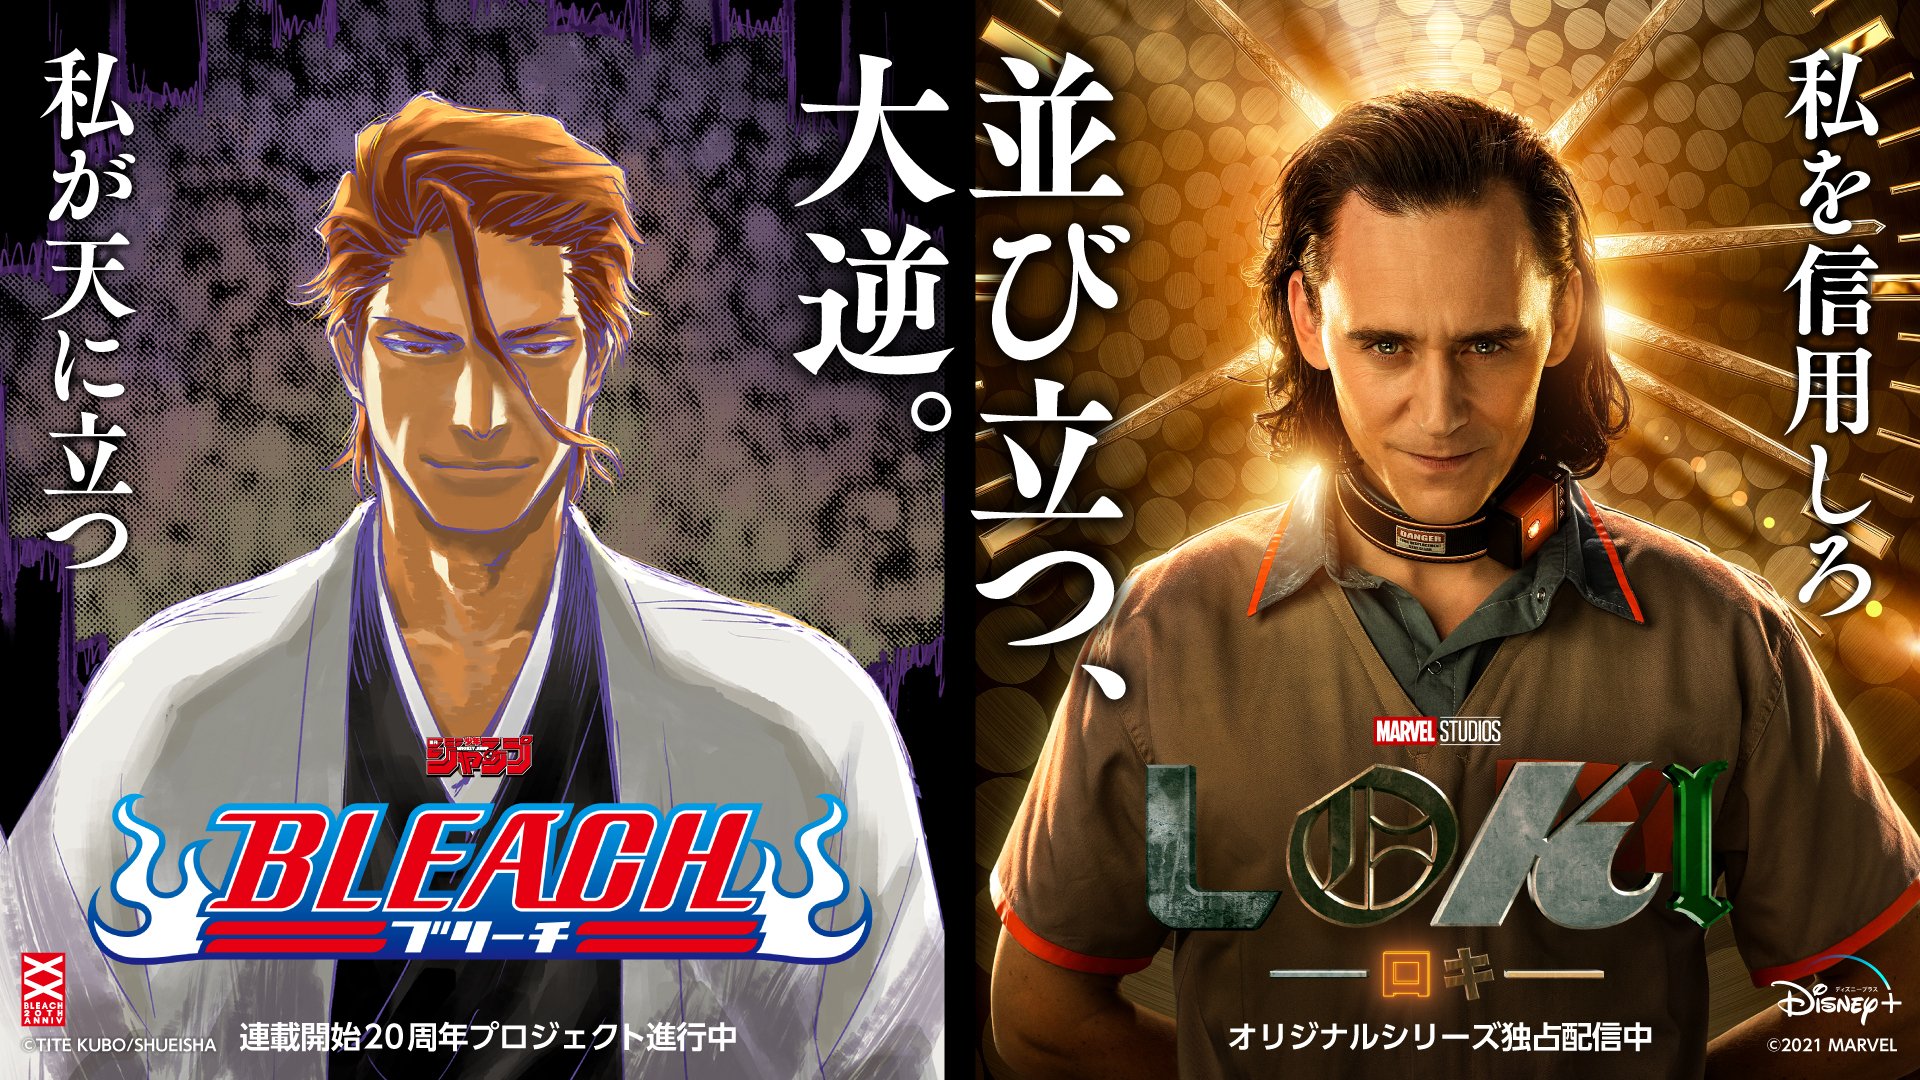 Crossover Loki y Bleach - Marvel Japan - GamersRD